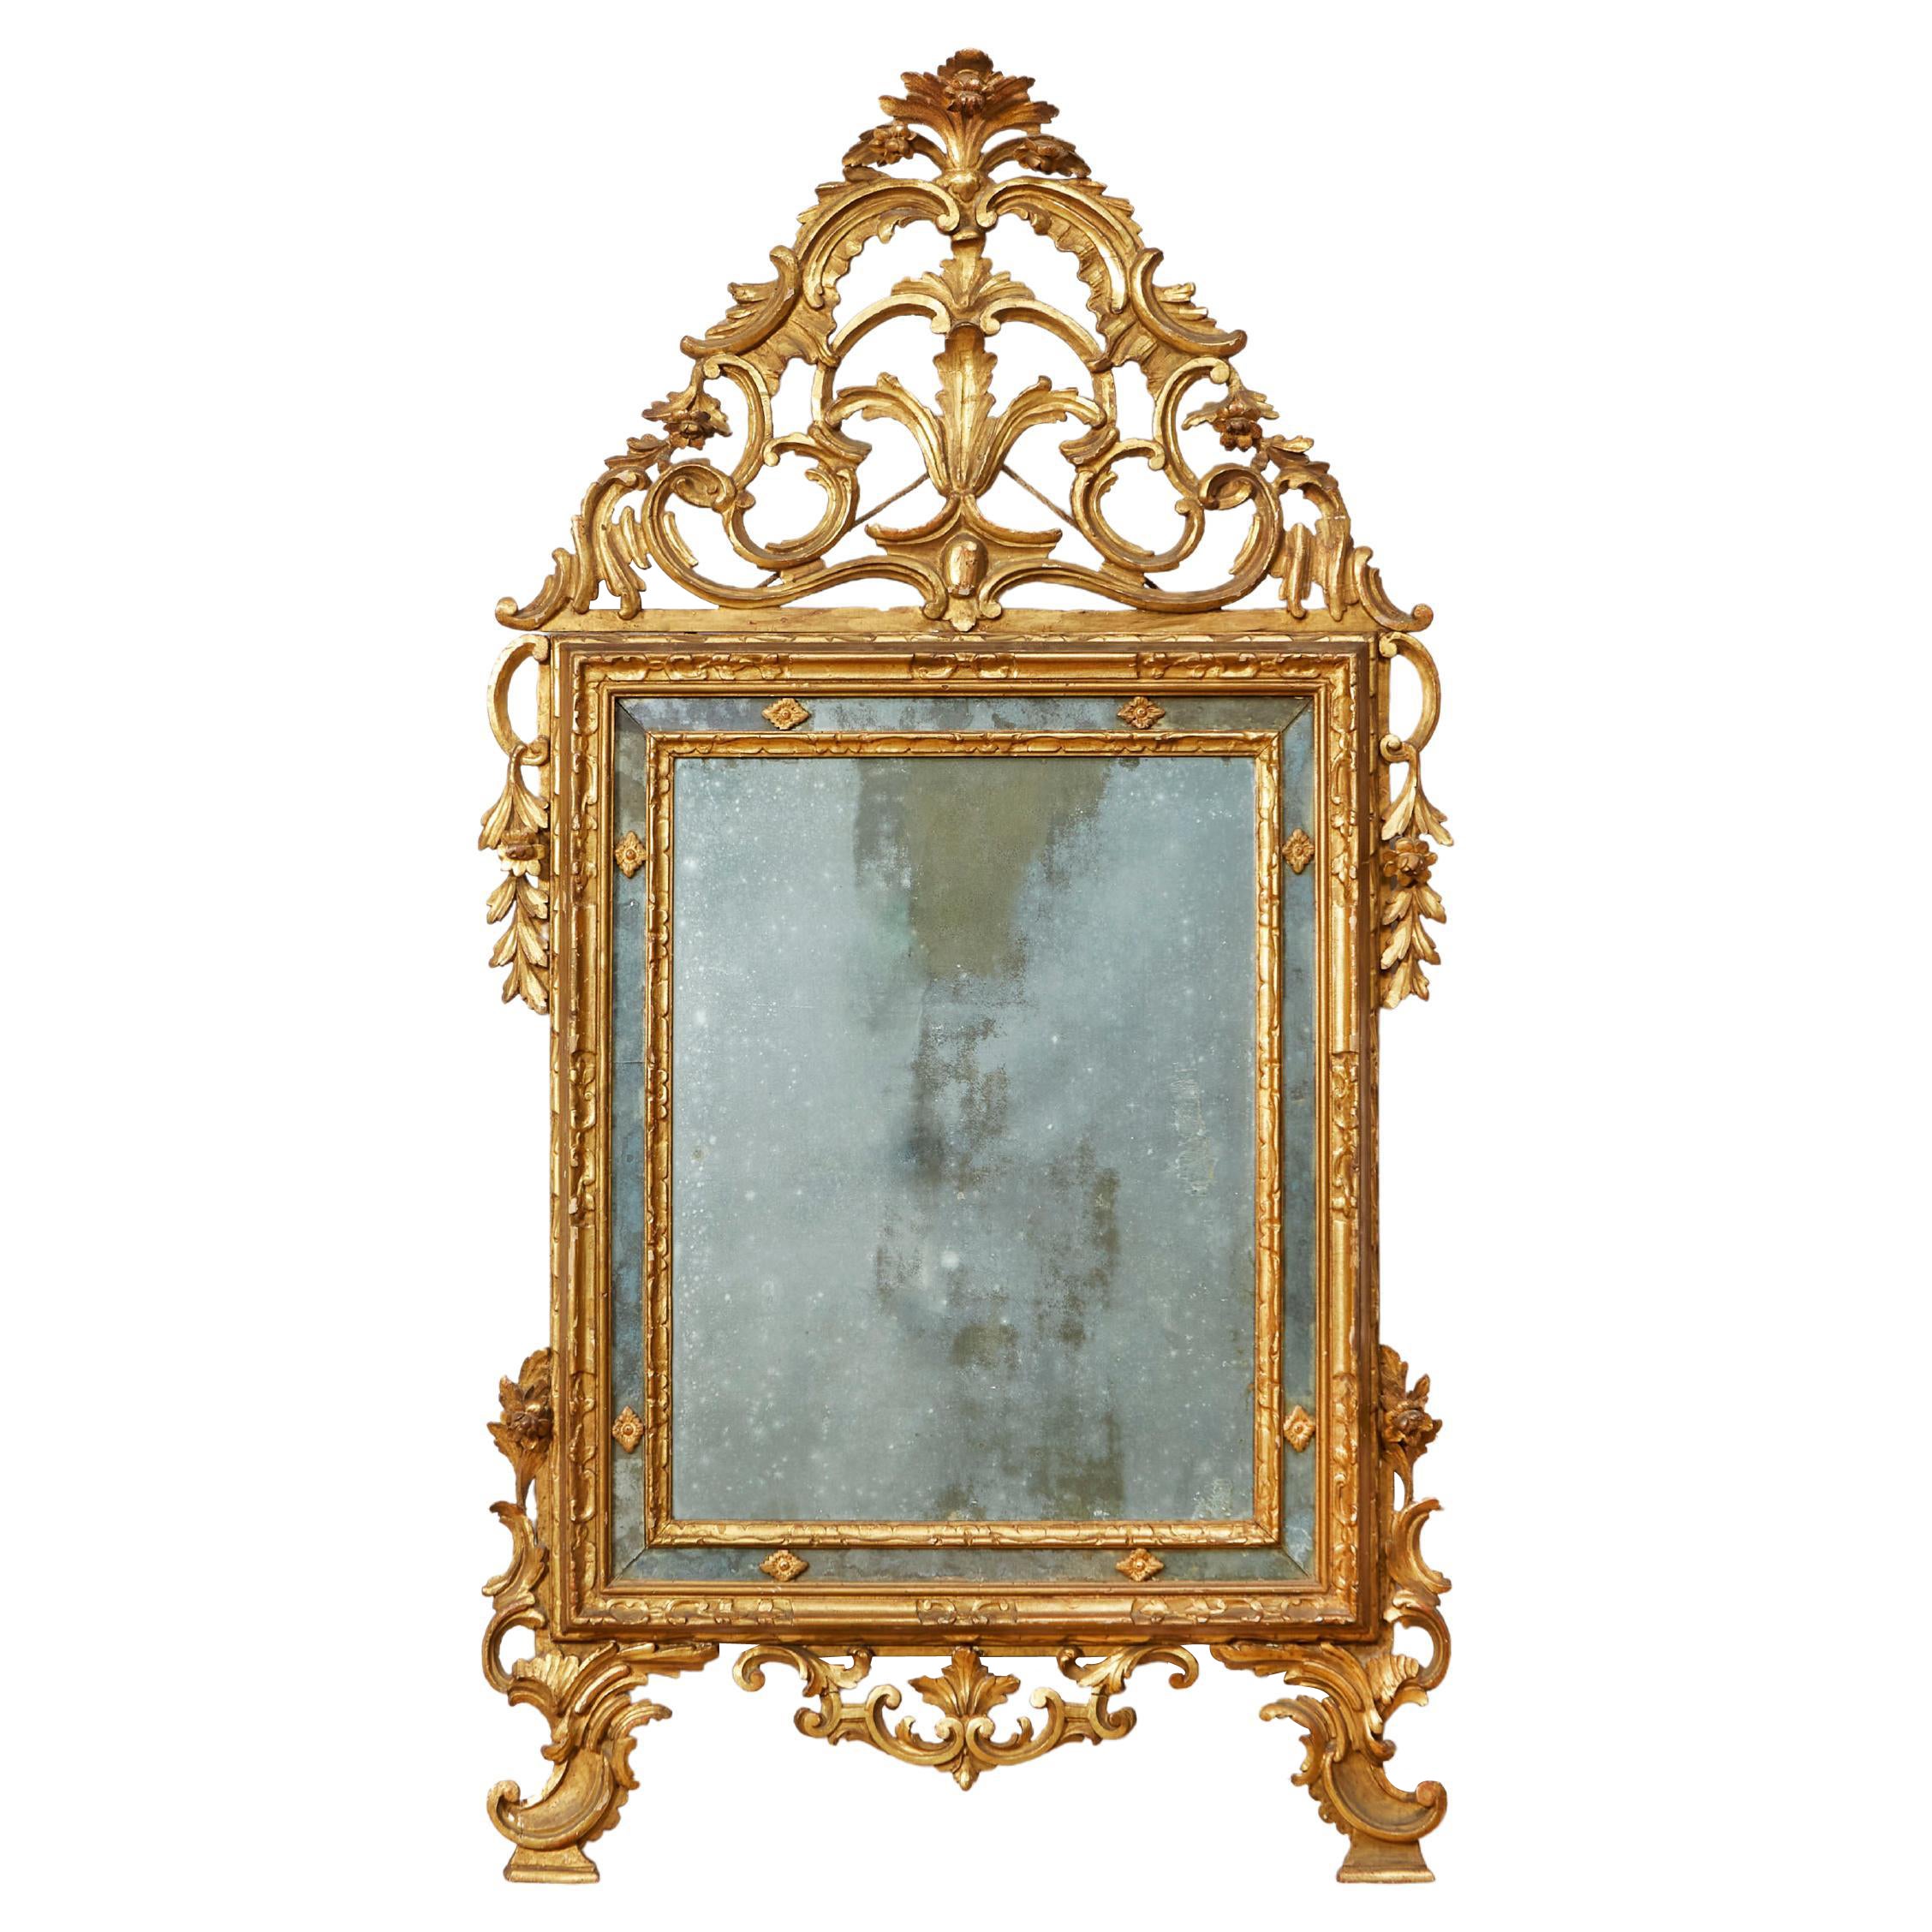 Miroir italien du XVIIIe siècle